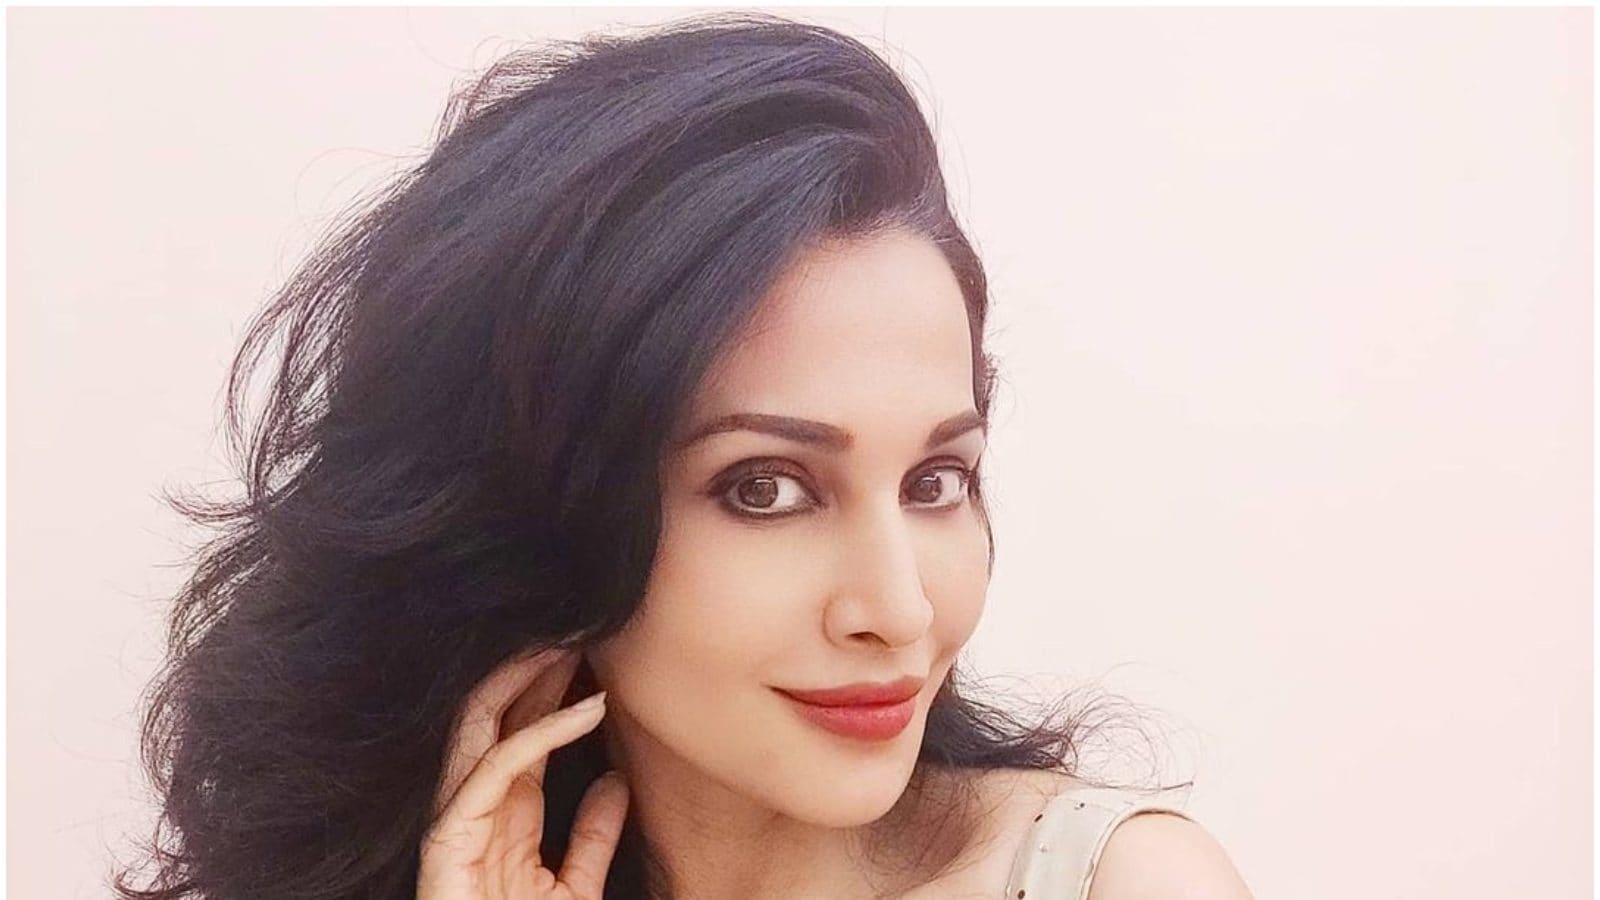 Flora Saini Porn Hd - Raj Kundra Case: 'Gandii Baat' Actress Flora Saini Said No When Approached  for Content on HotShots App - News18